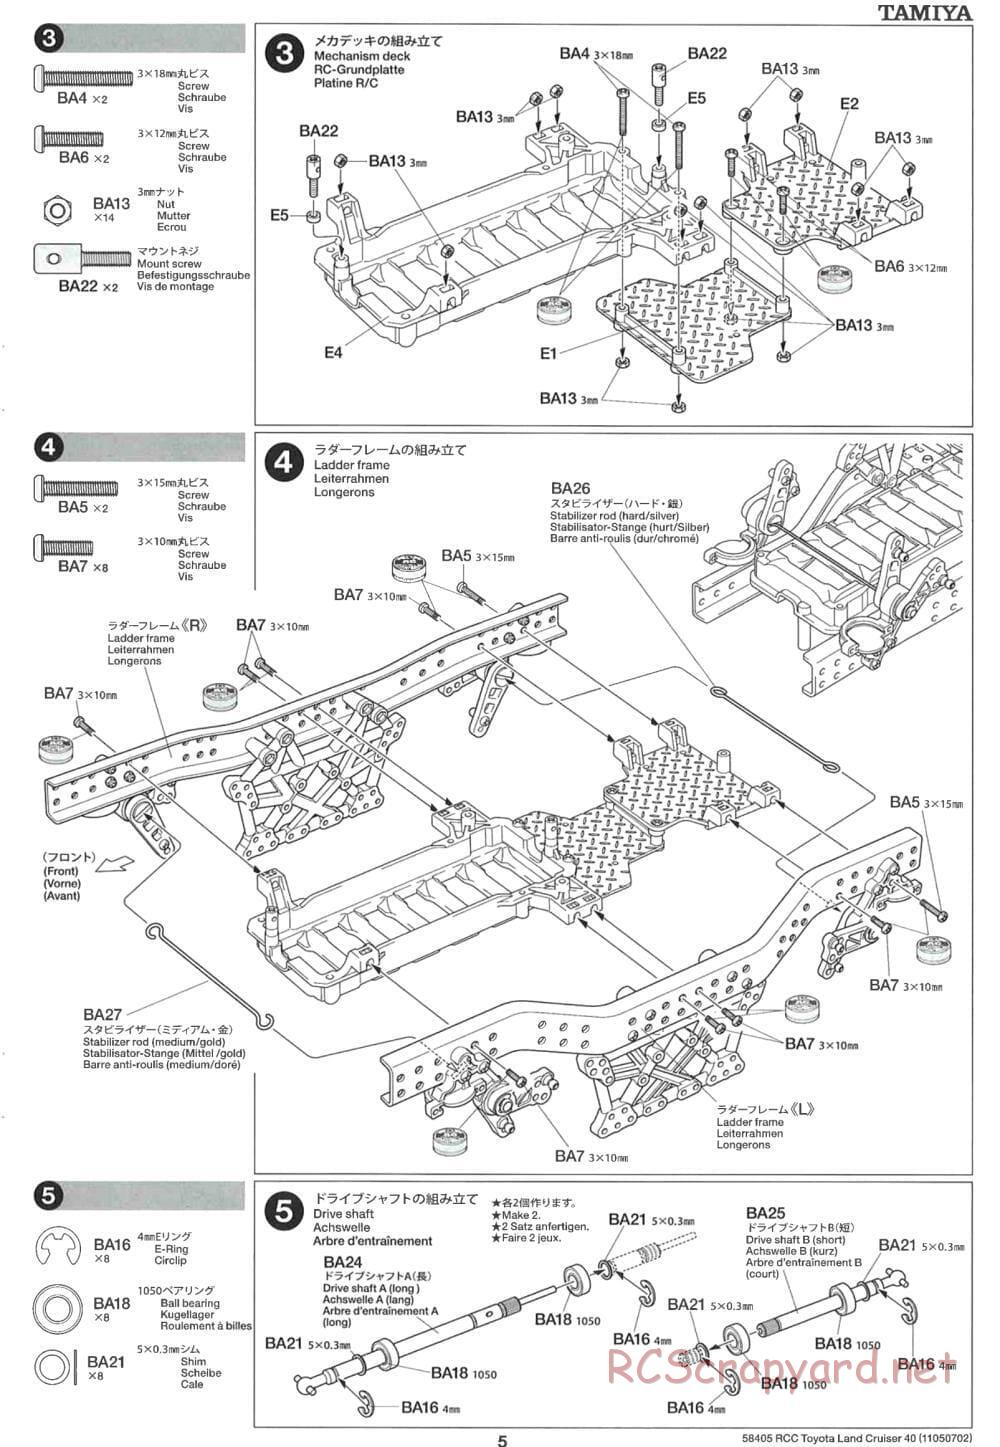 Tamiya - Toyota Land Cruiser 40 - CR-01 Chassis - Manual - Page 5